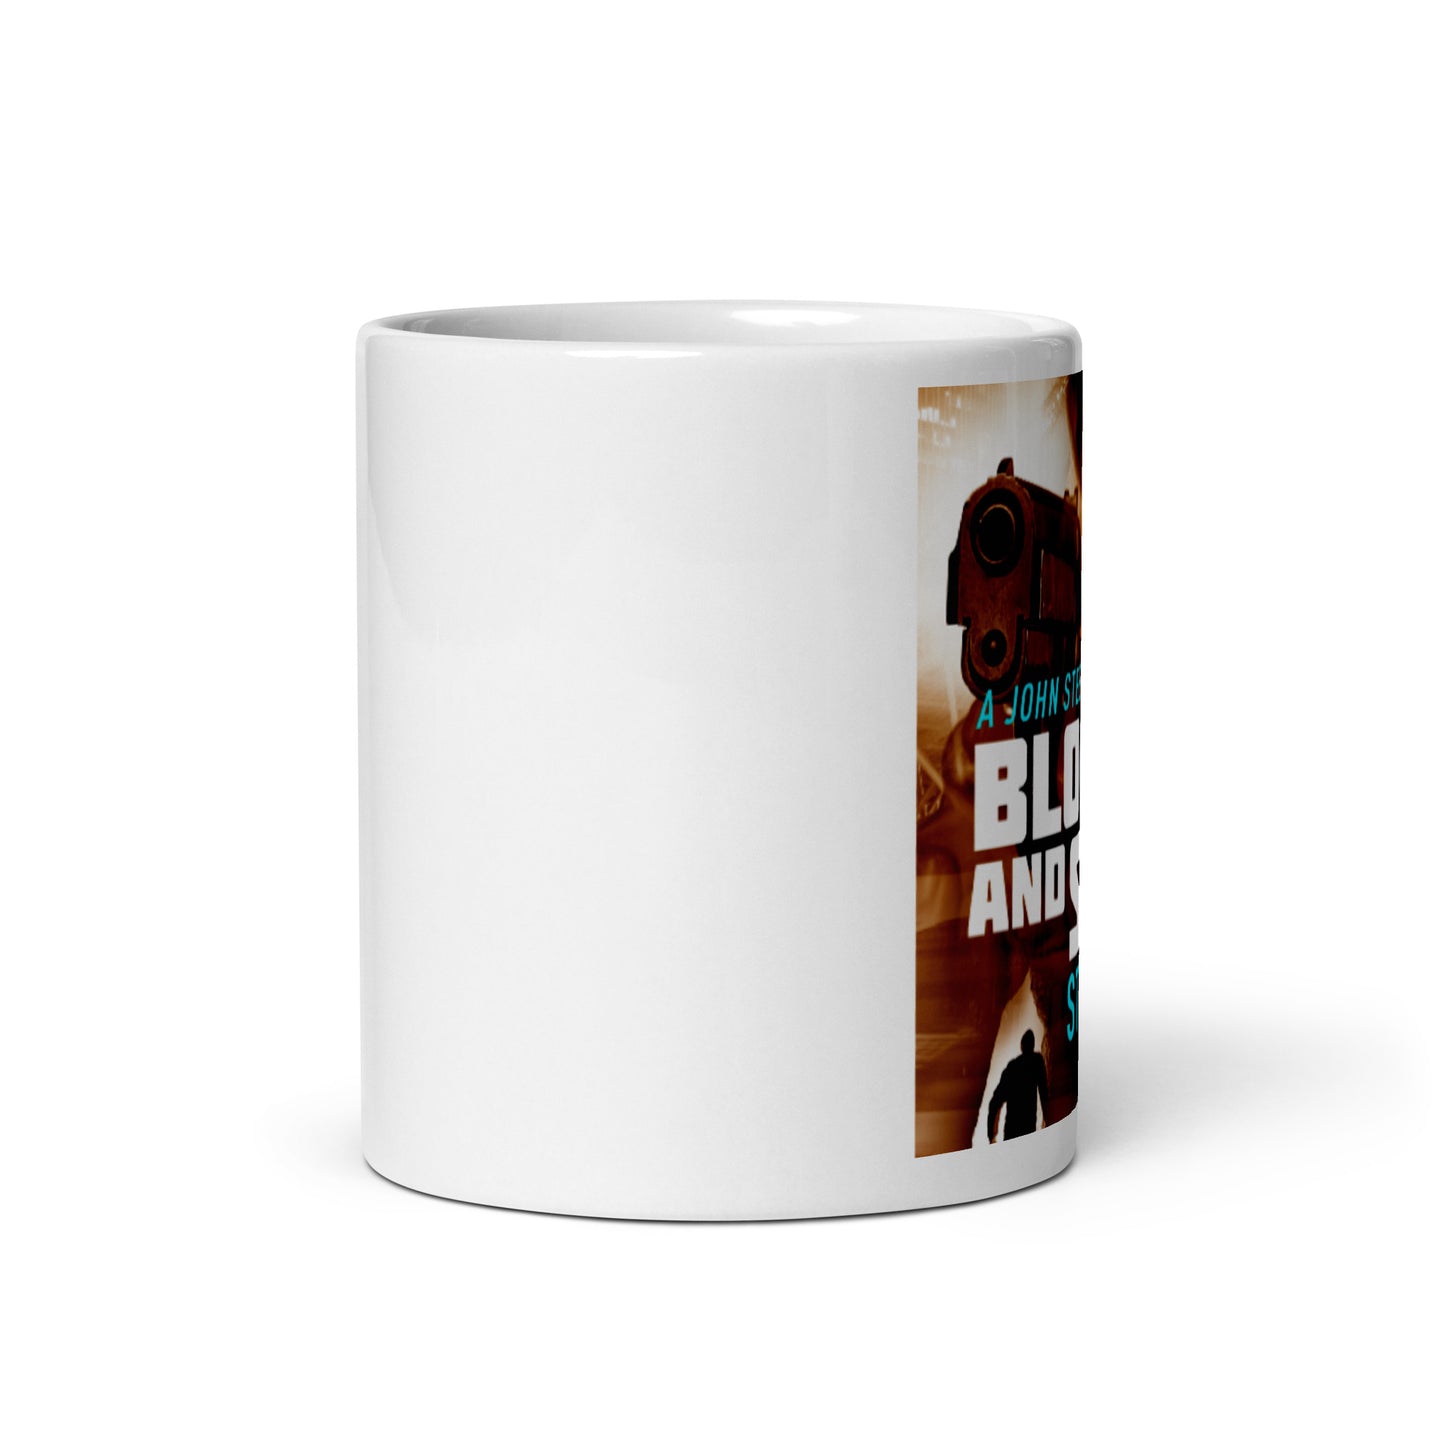 Blood And Steel - White Coffee Mug